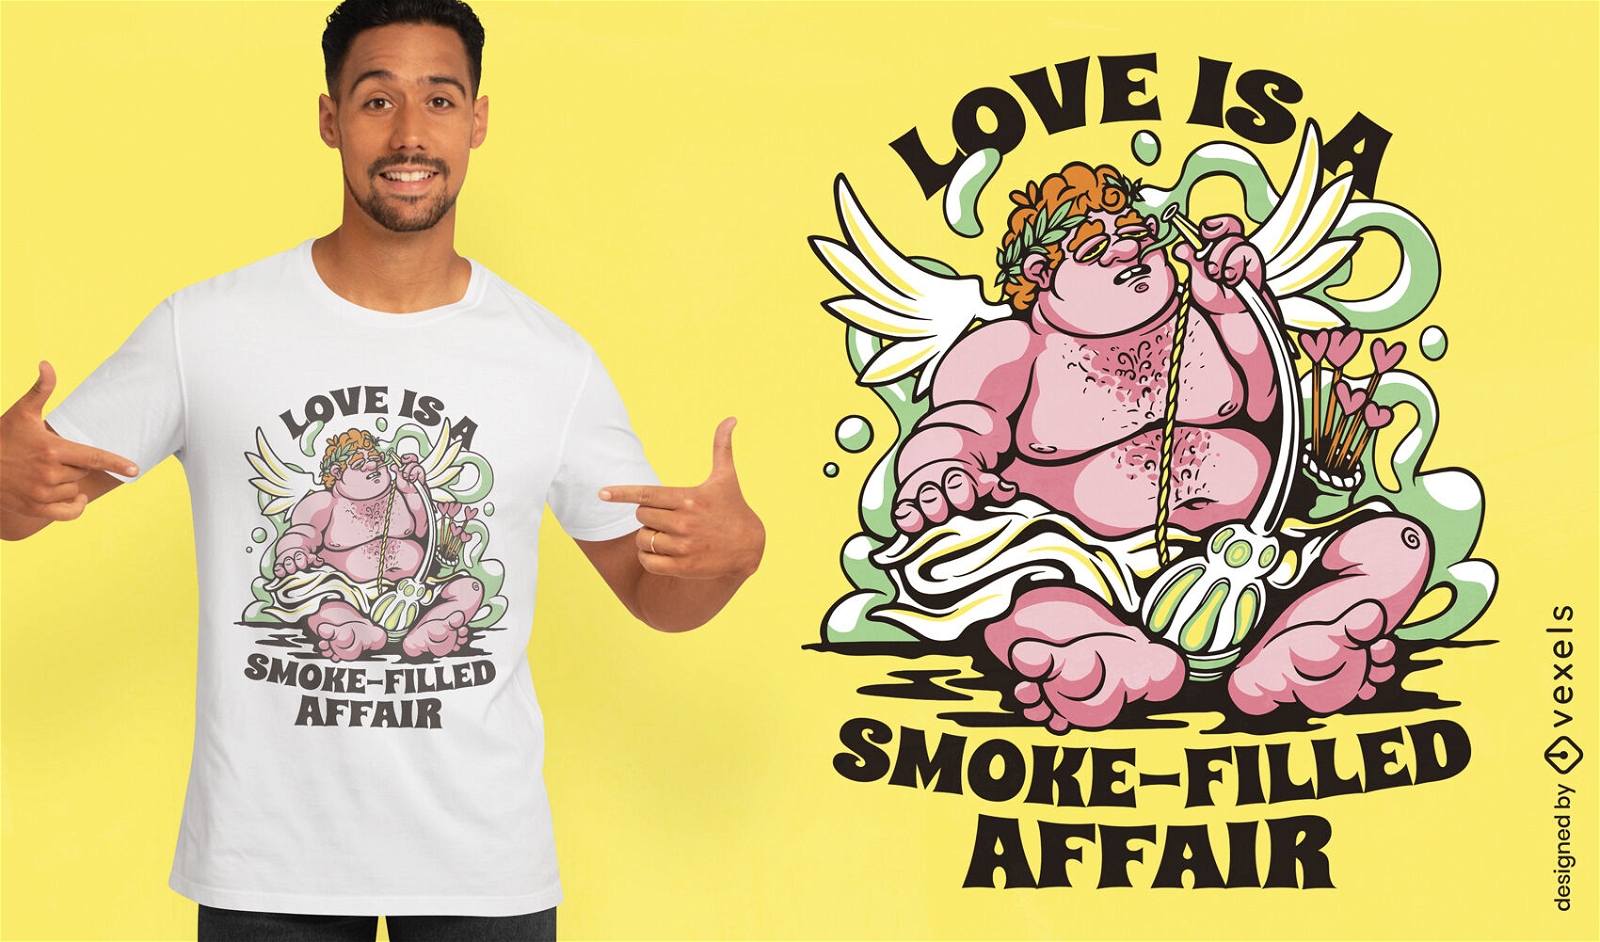 Love angel smoking shisha t-shirt design